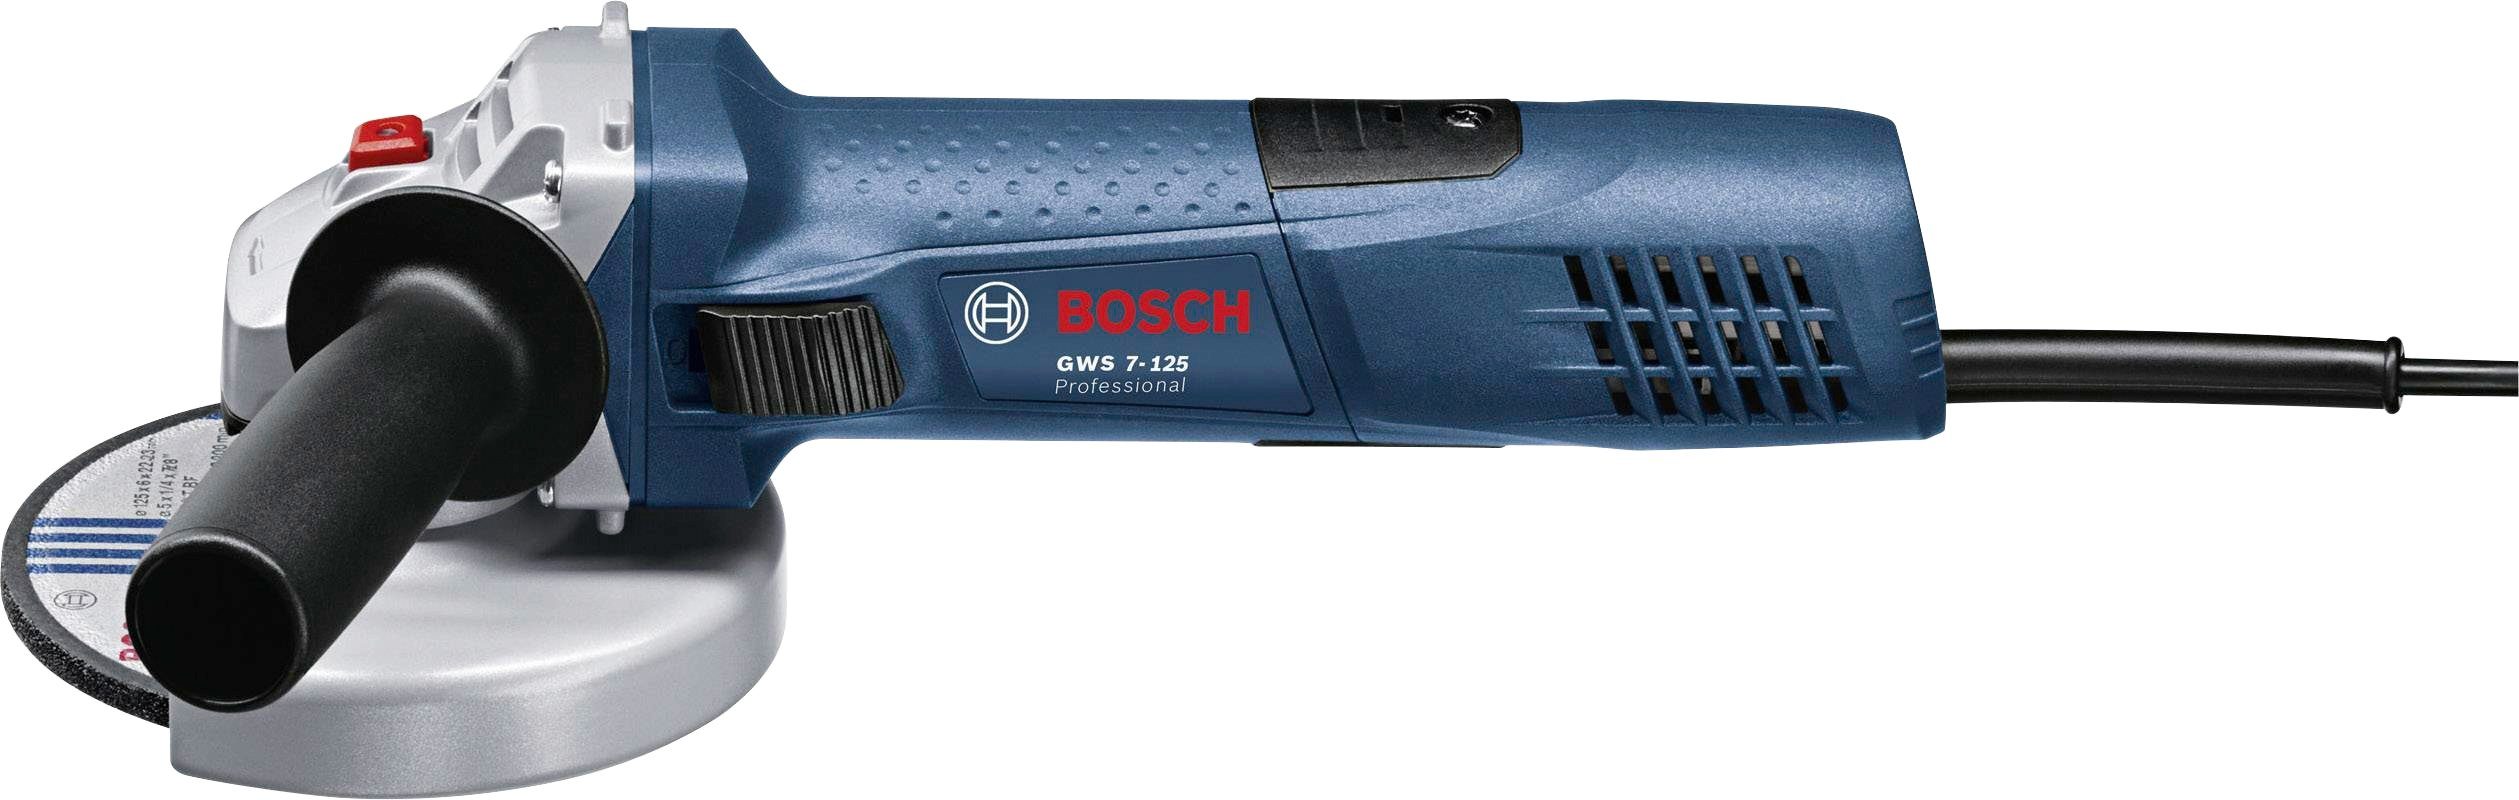 Bosch Professional Winkelschleifer GWS 7-125, W 720